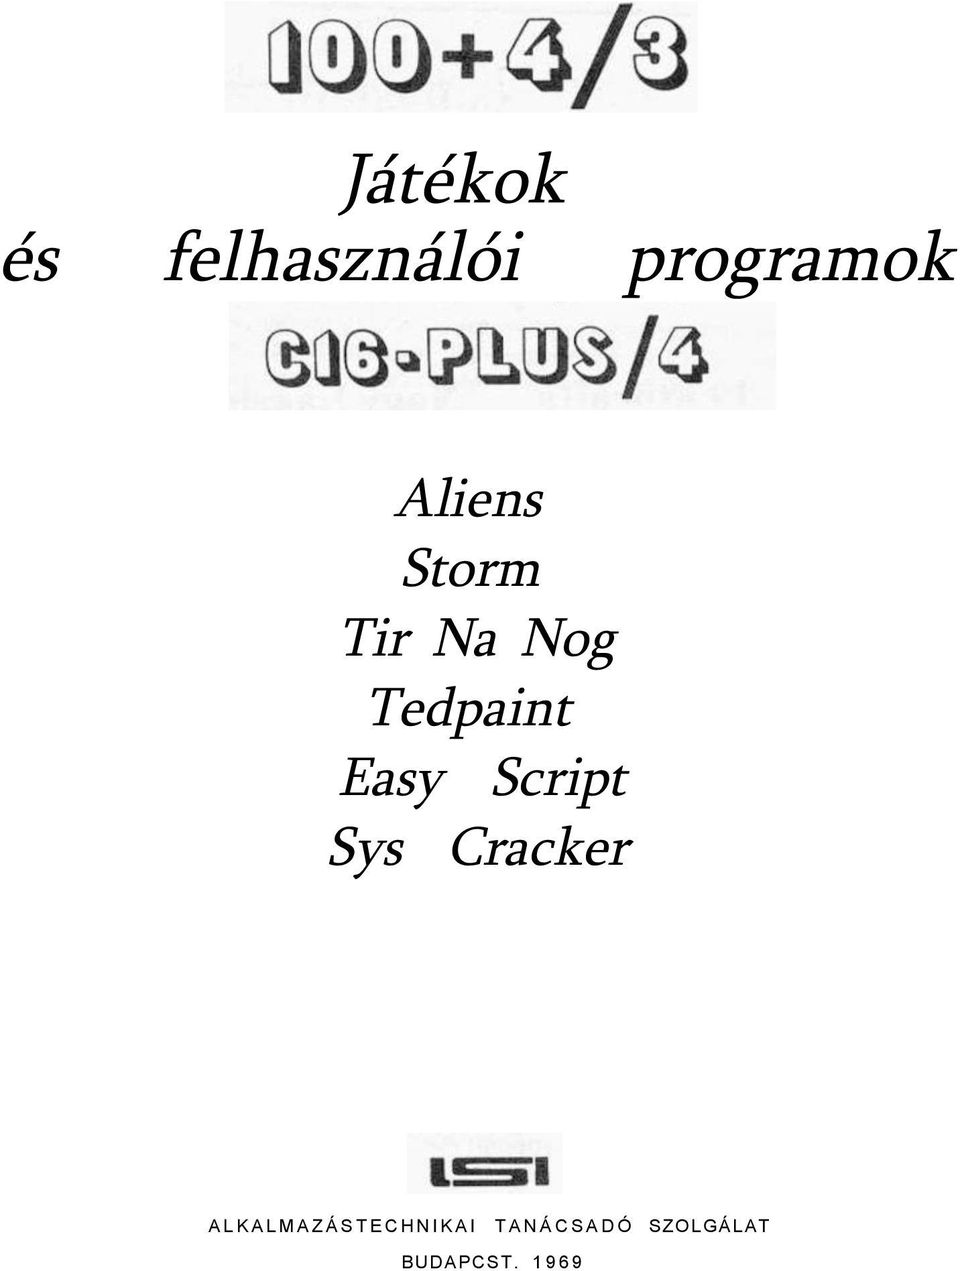 Easy Script Sys Cracker